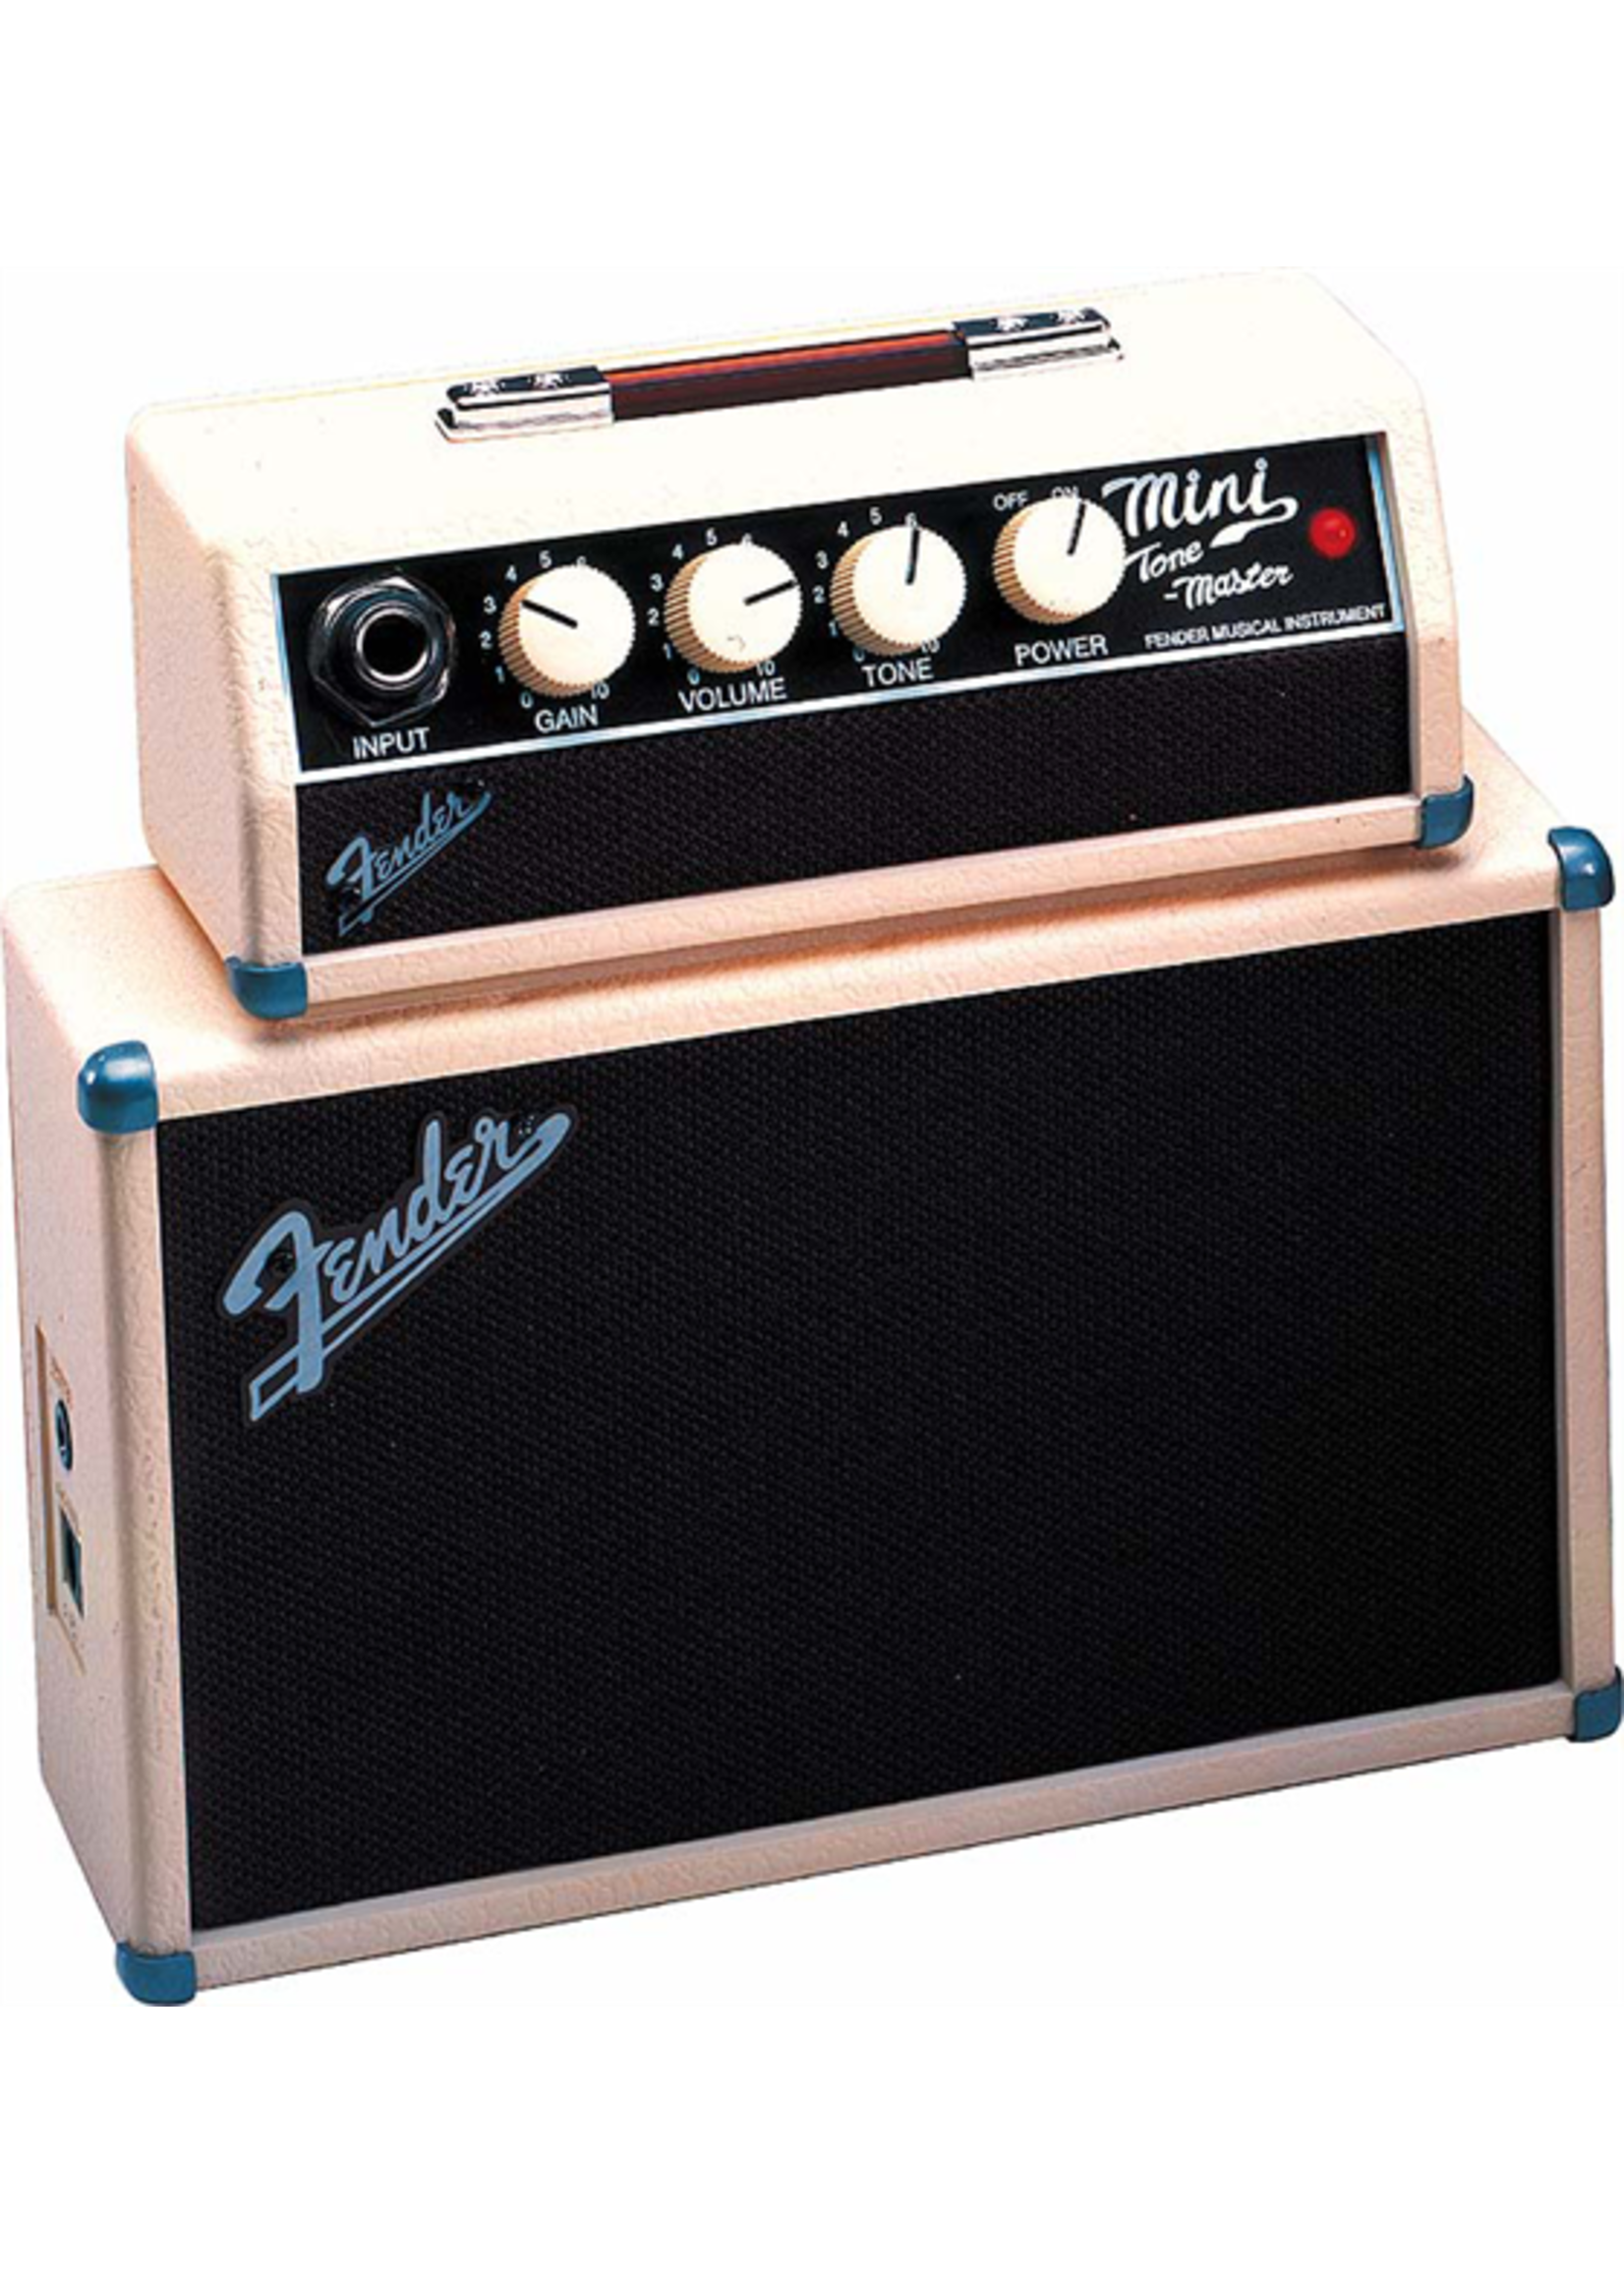 Fender Fender Amplifier Mini Tonemaster